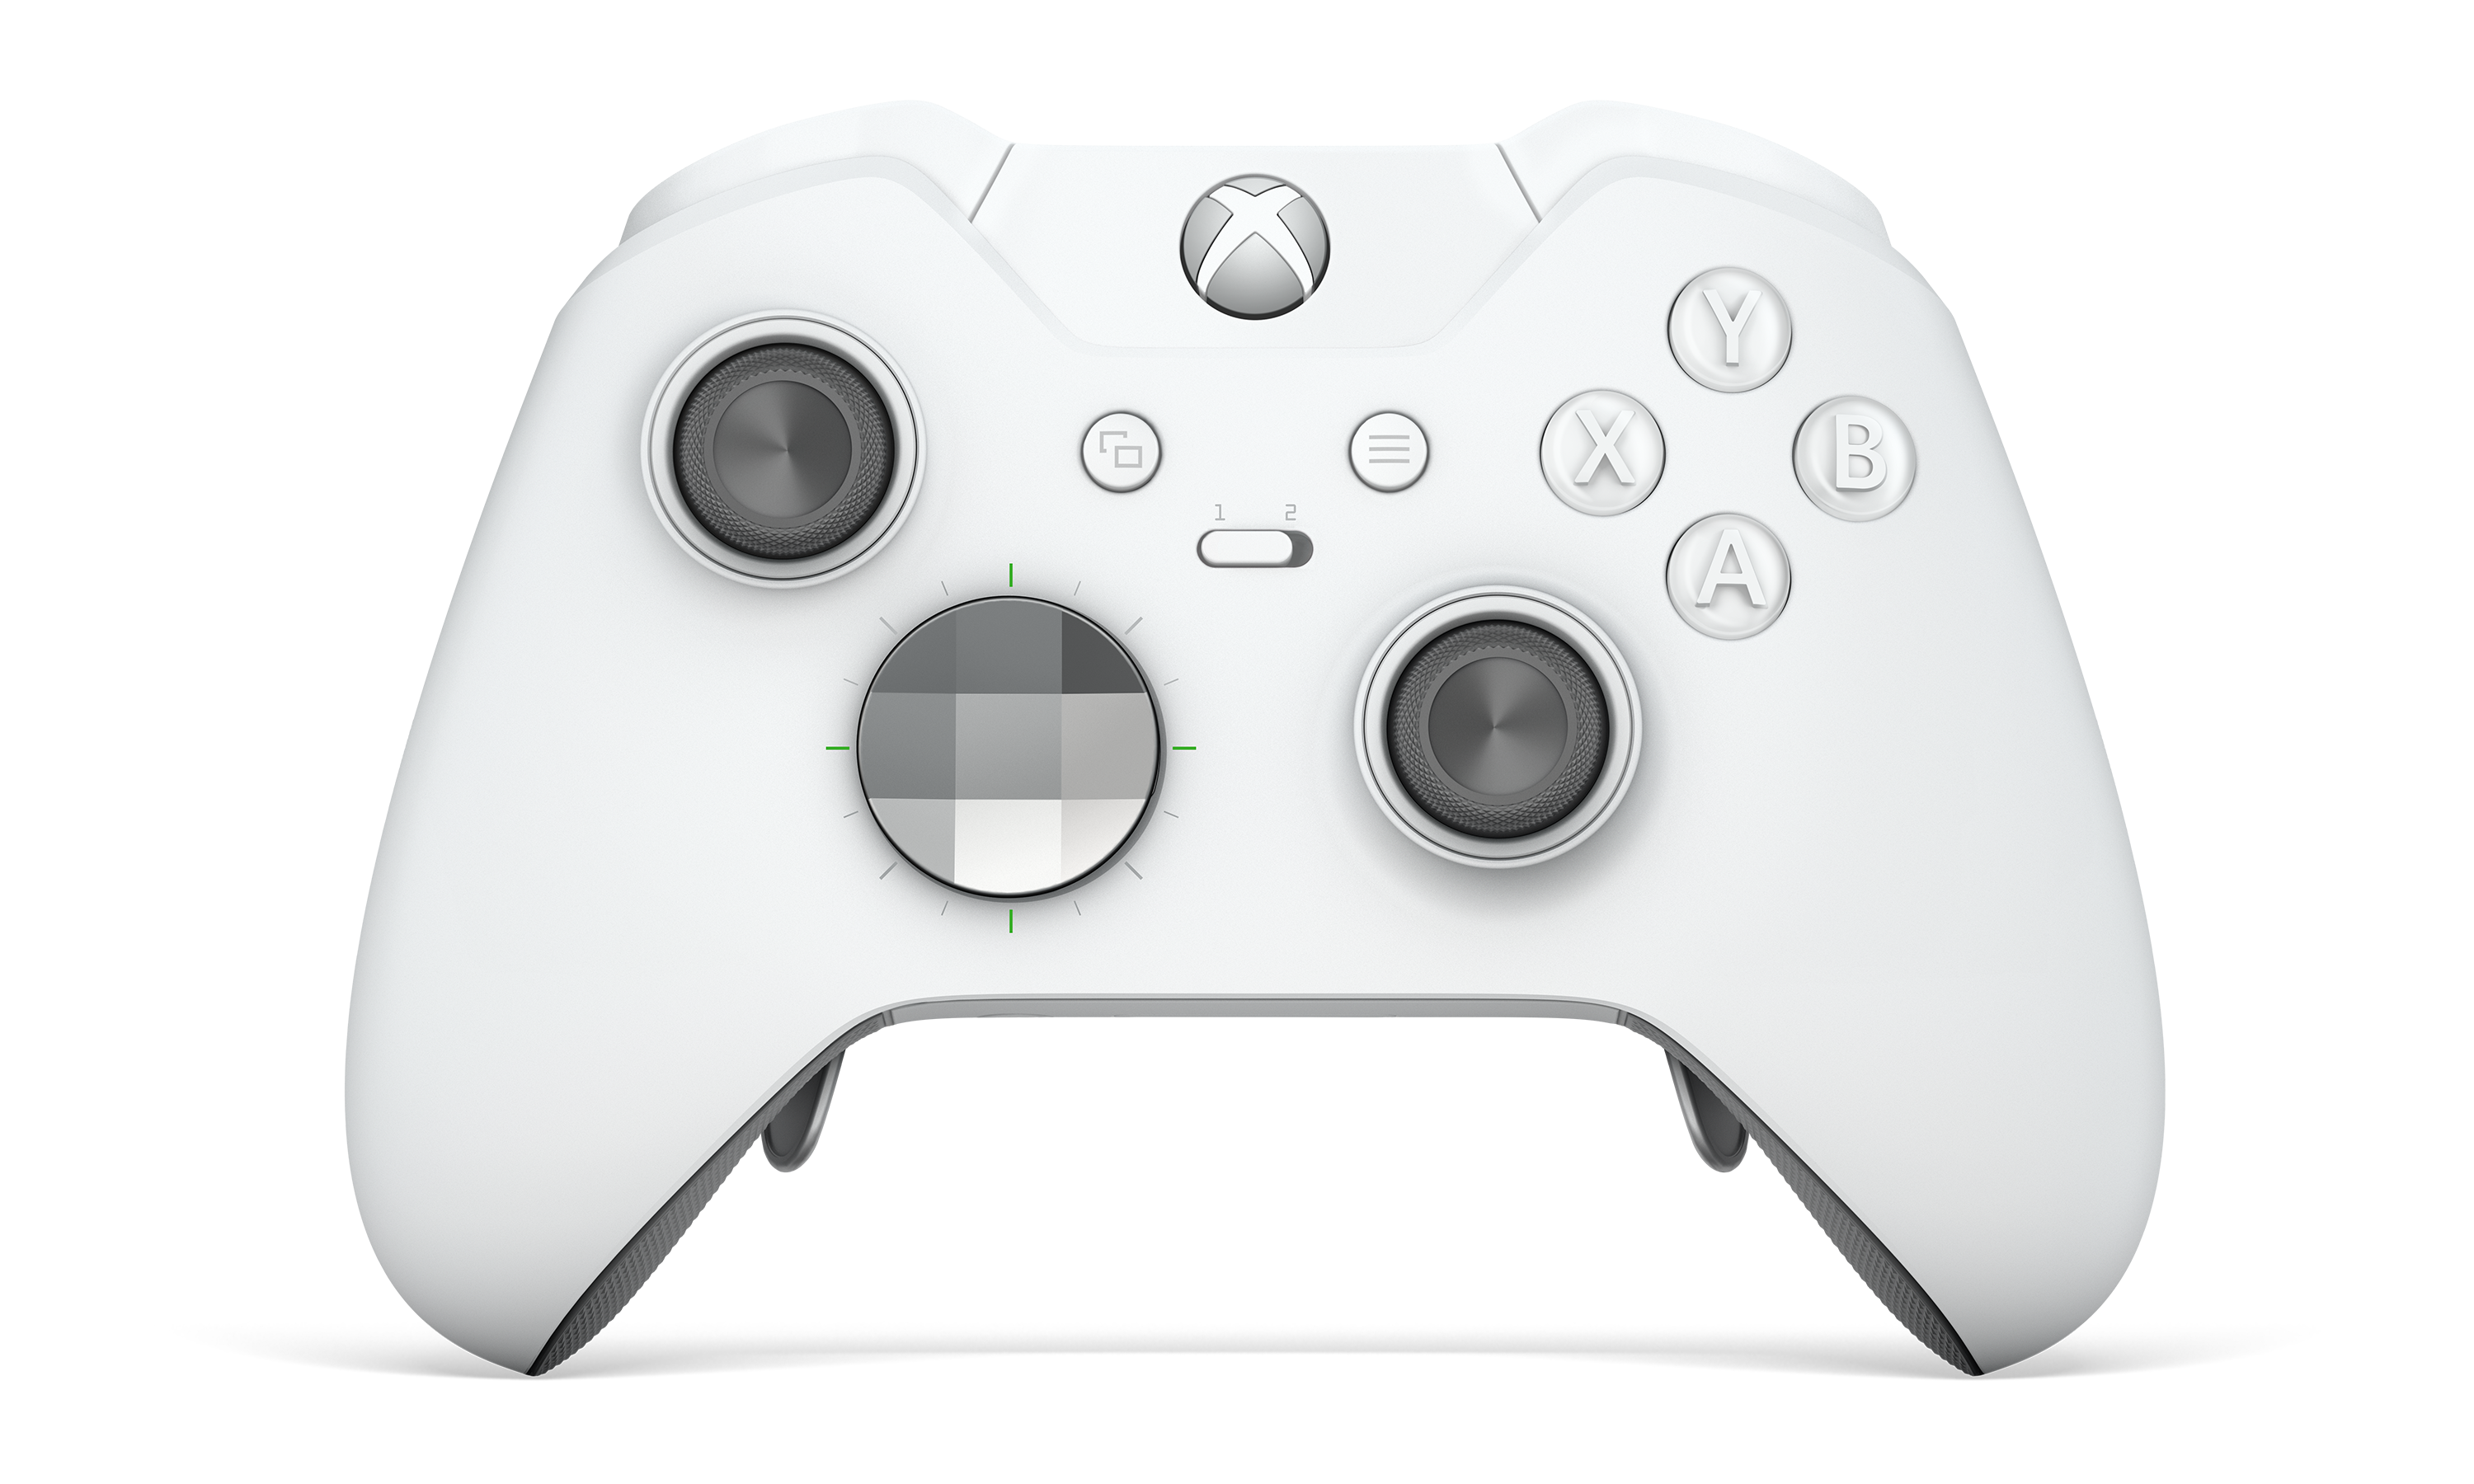 Necxus - Joystick Xbox One White Elite Special Edition OEM